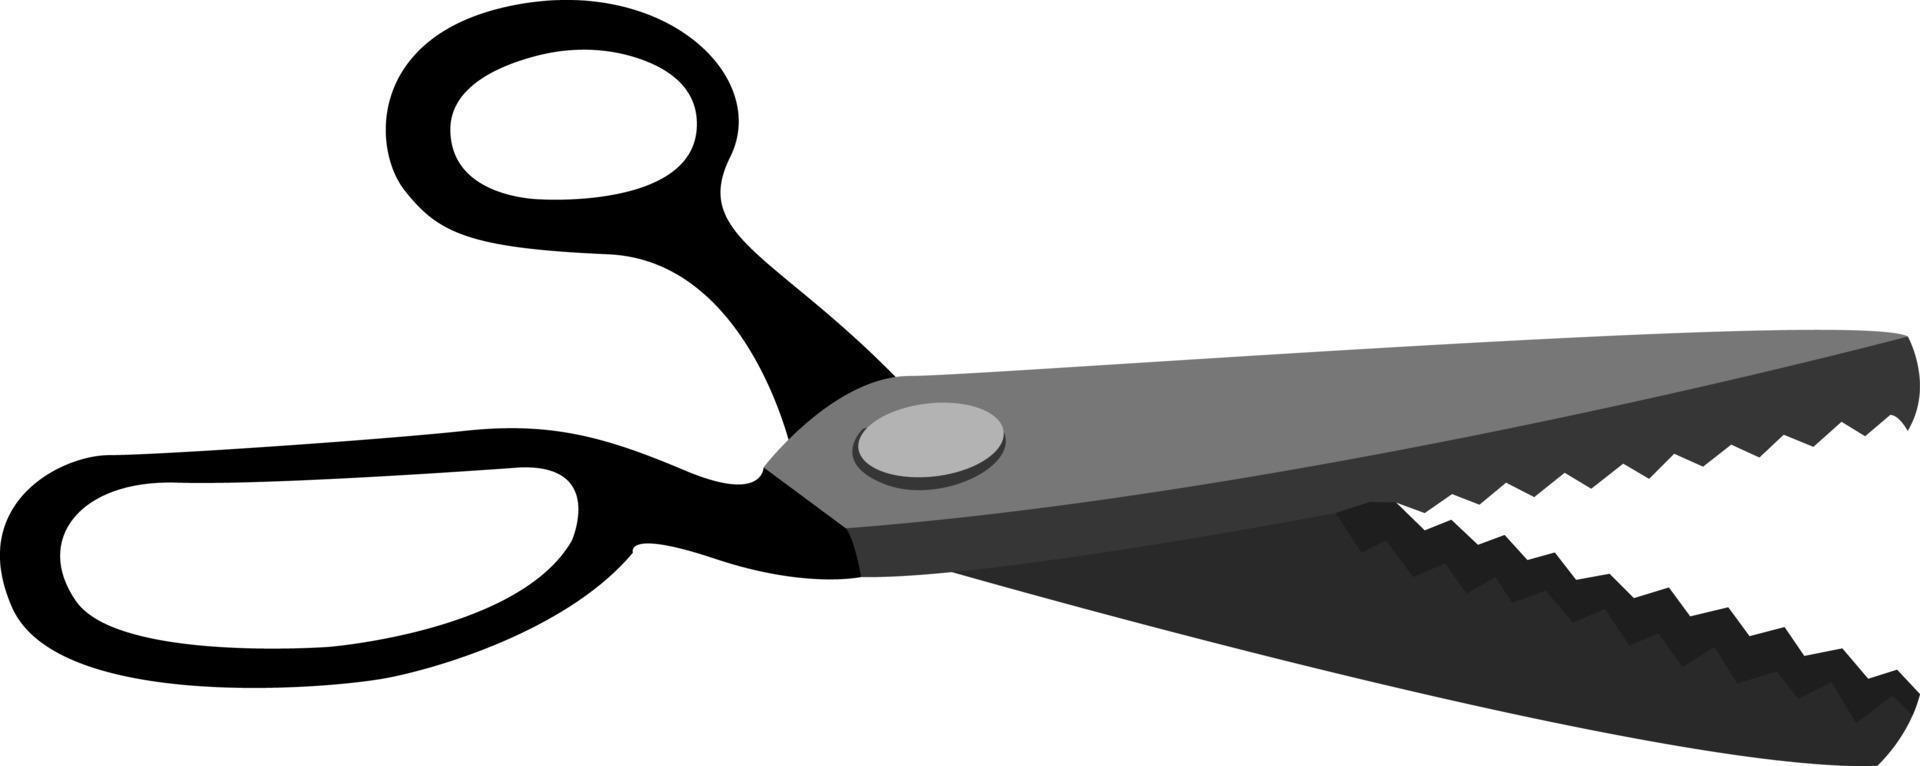 Zigzag scissors, illustration, vector on white background.